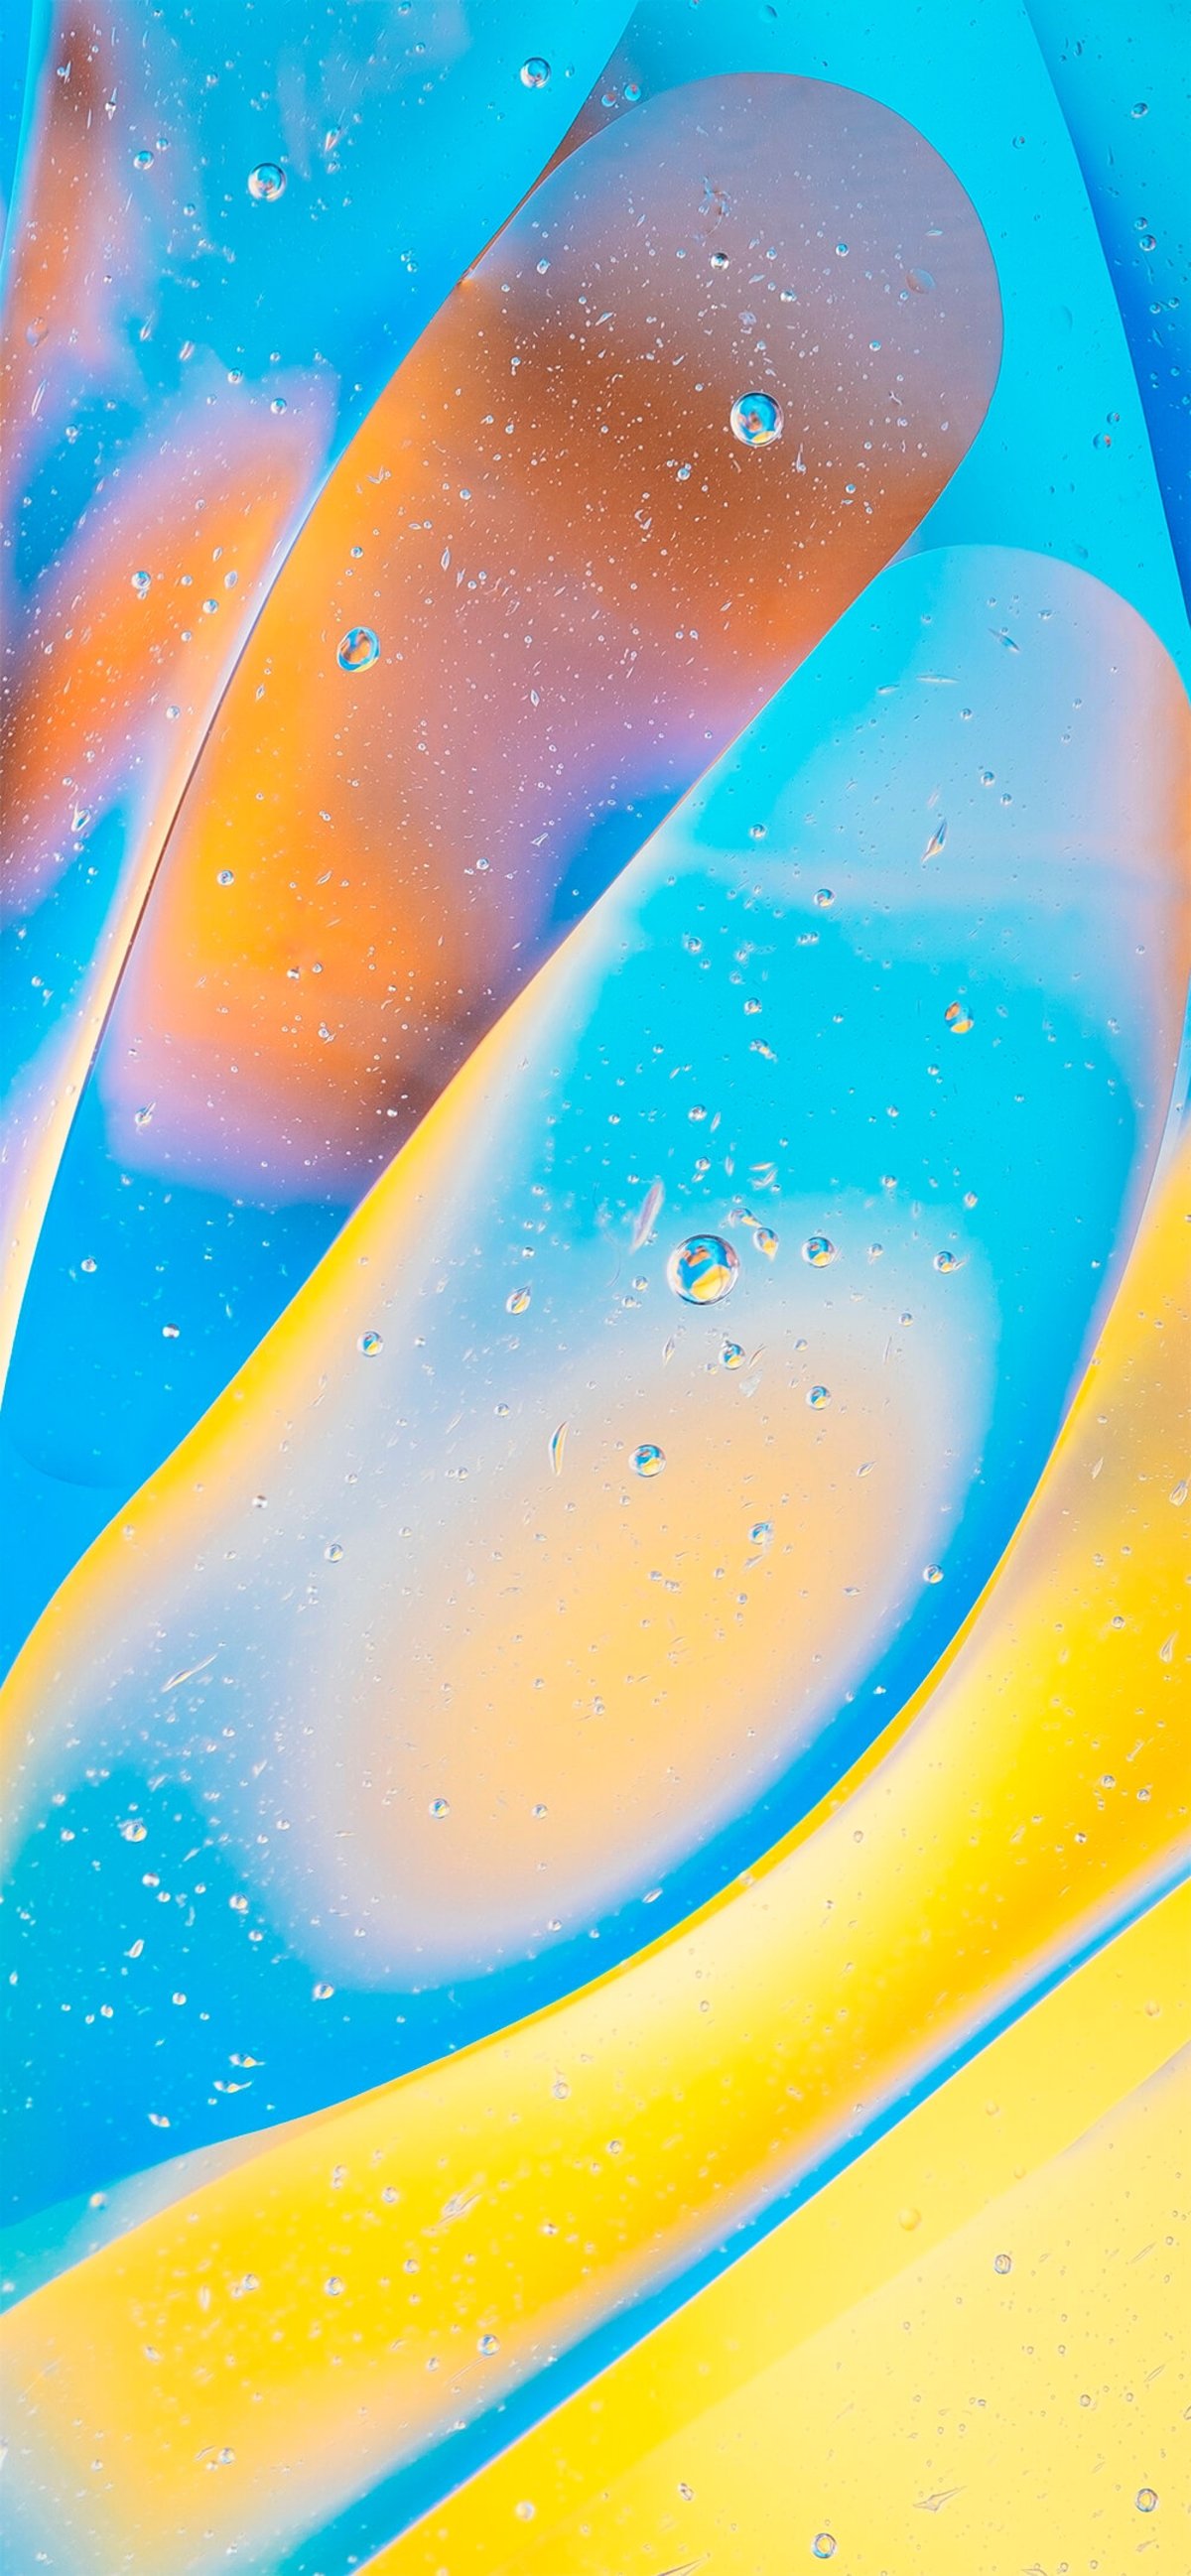 Dale color a tu iPhone: los mejores wallpapers coloridos